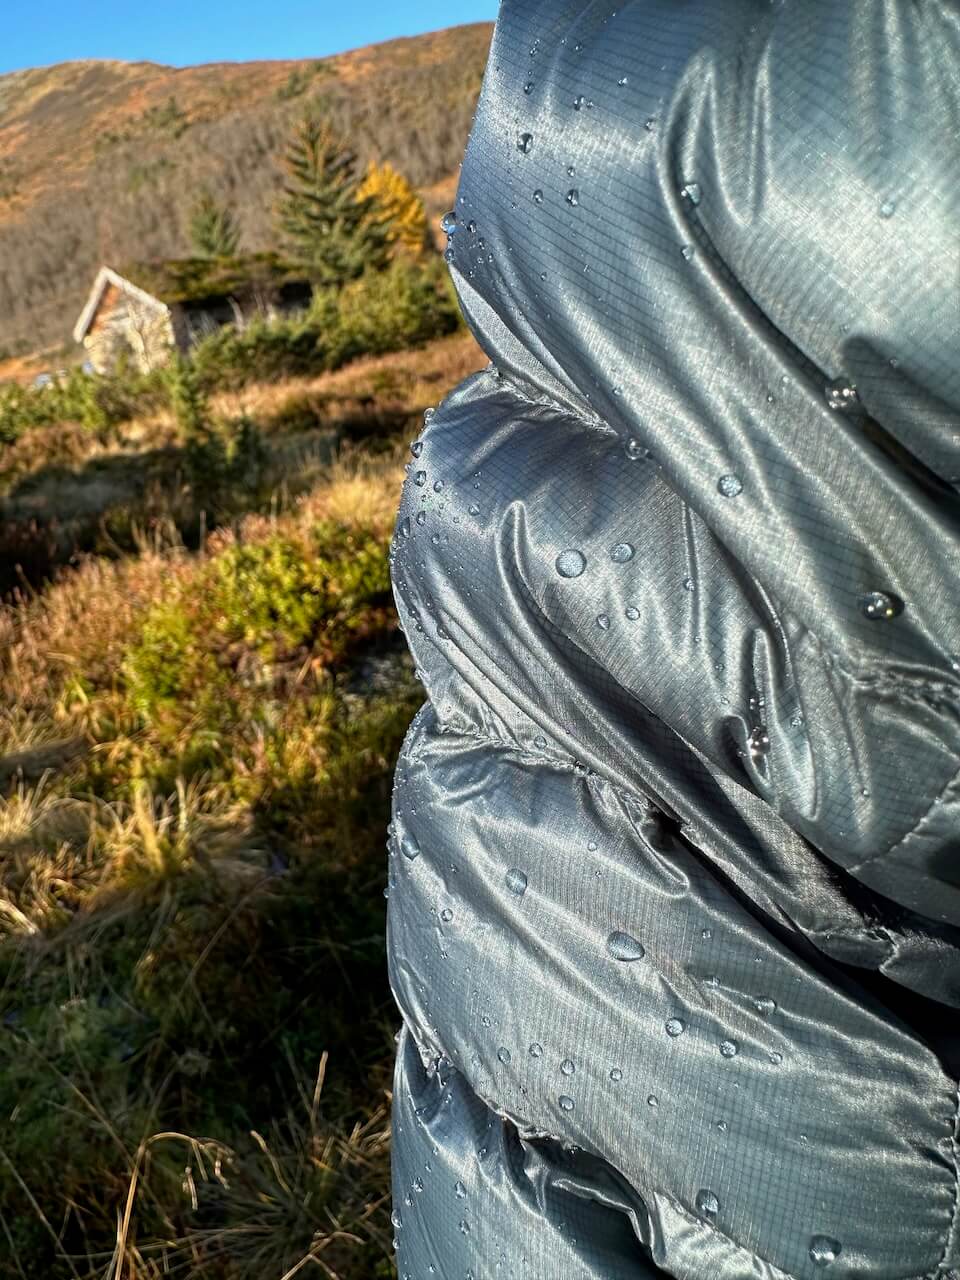 Rab Mythic Alpine Jacket